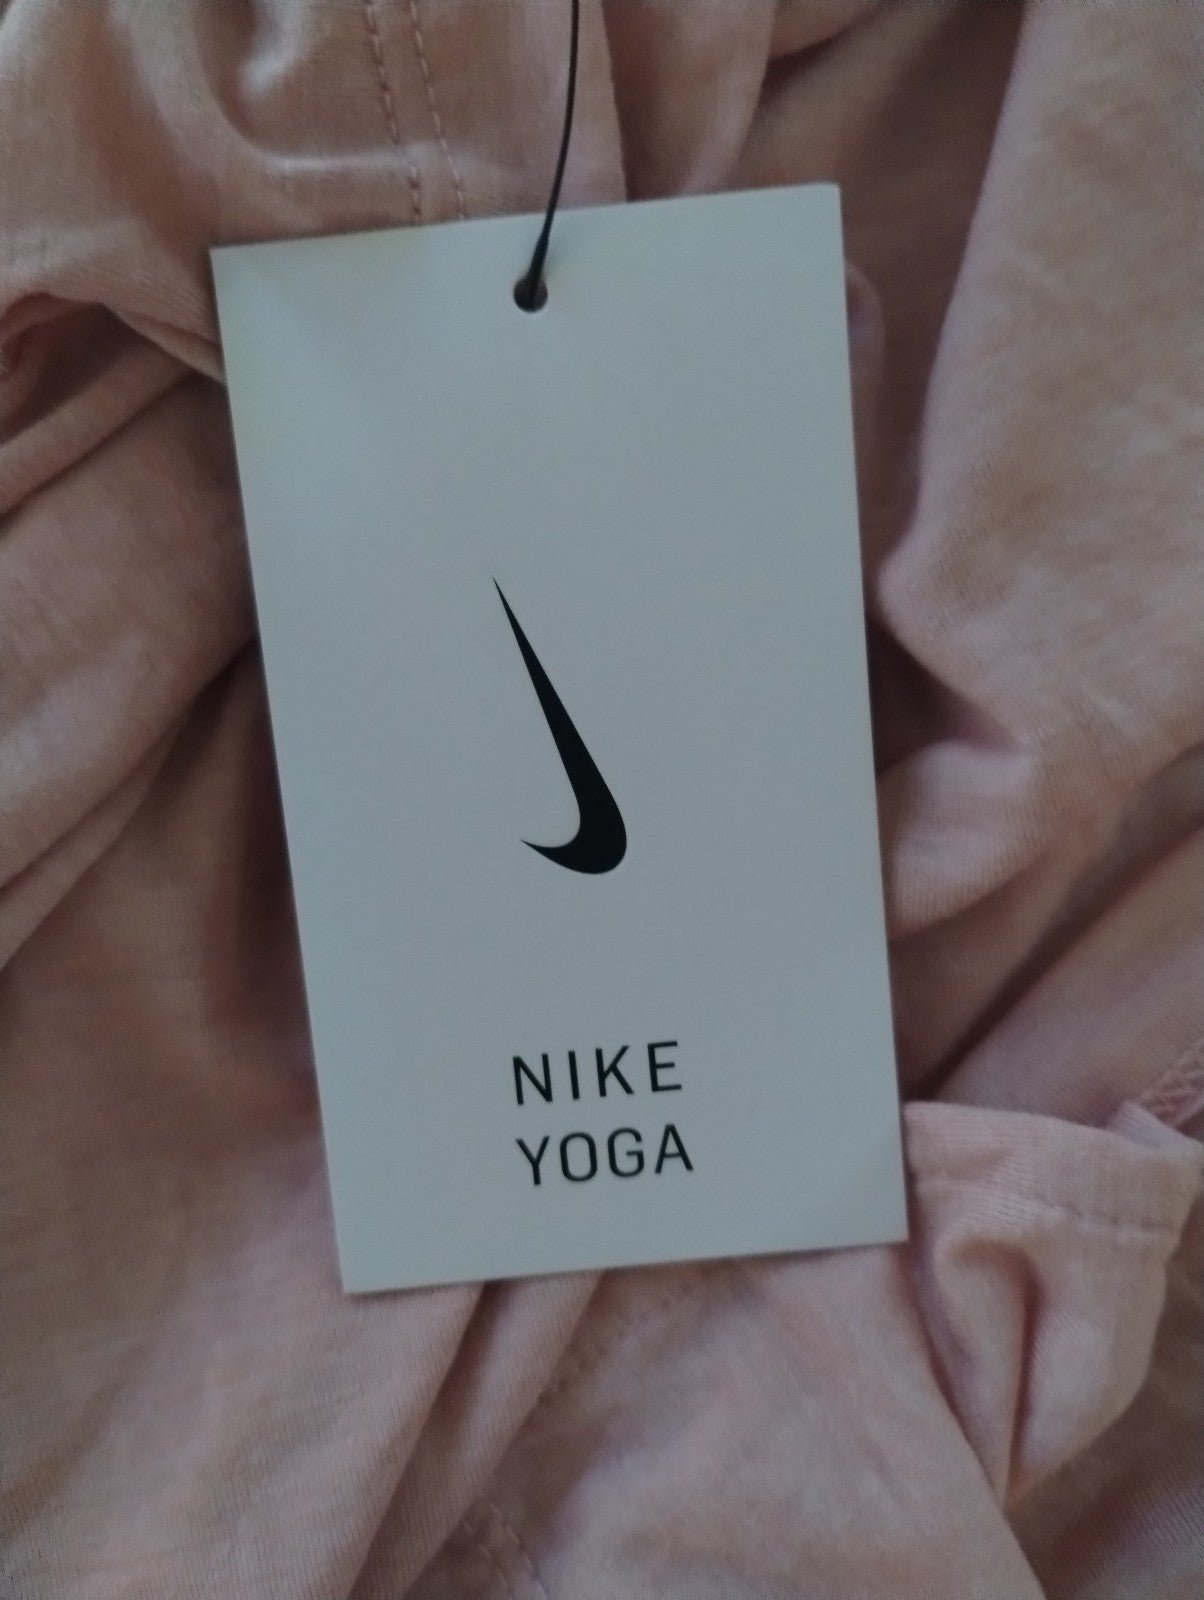 Wholesale price Nike Yoga Top Plus Size Short-Sleeve - Sizes 1X hokac6w2U well sale